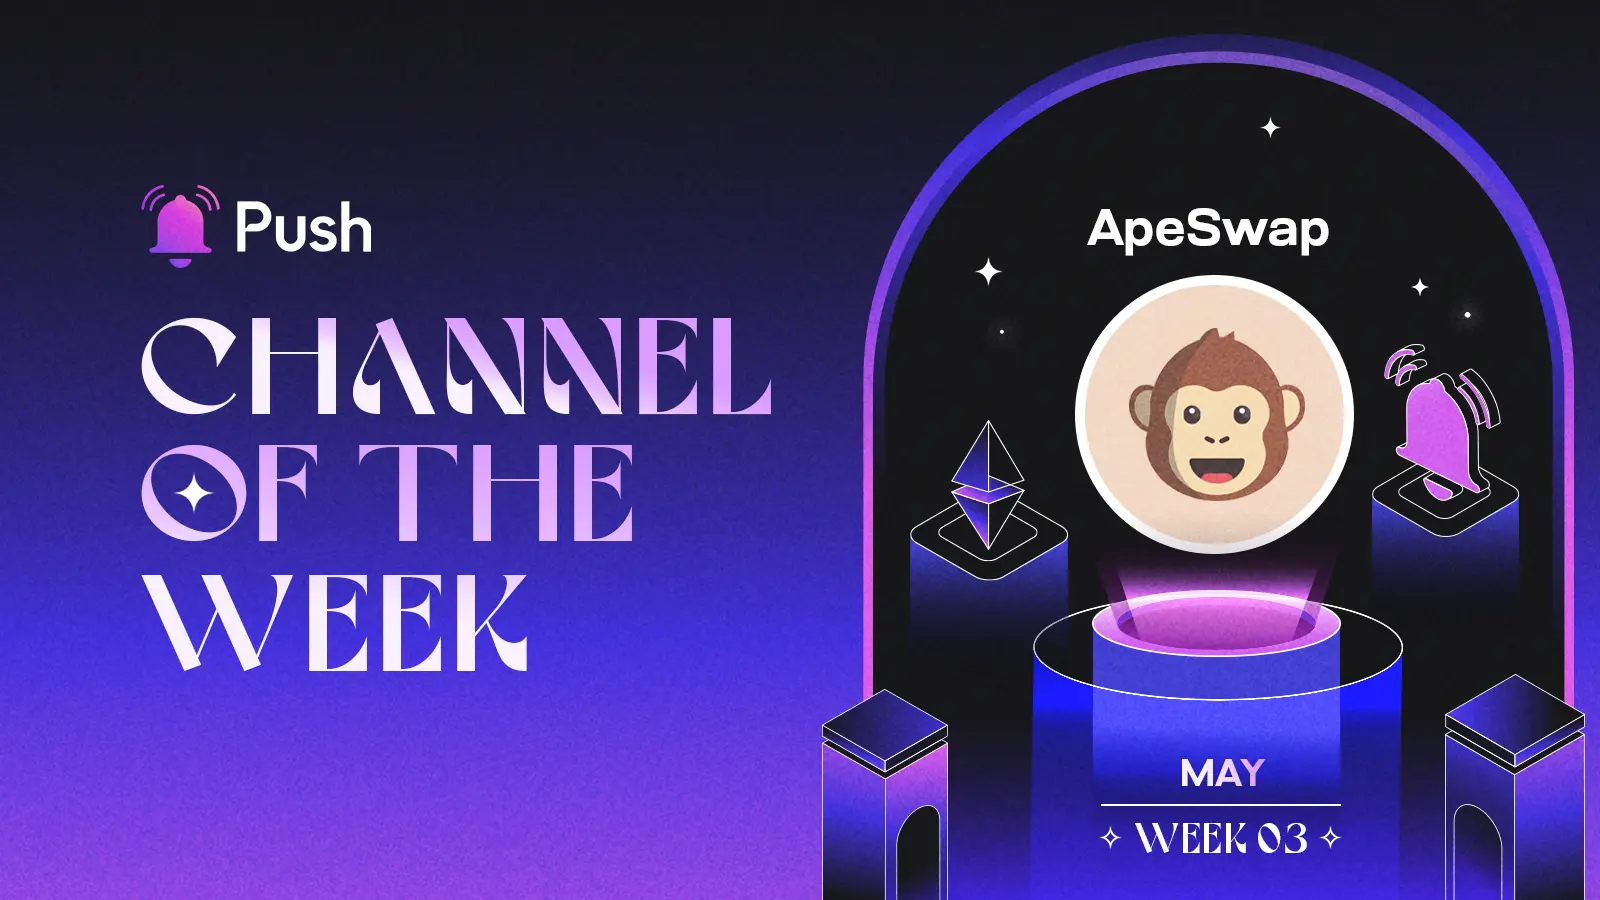 Banner celebrating ApeSwap as May - week 3 channel of week